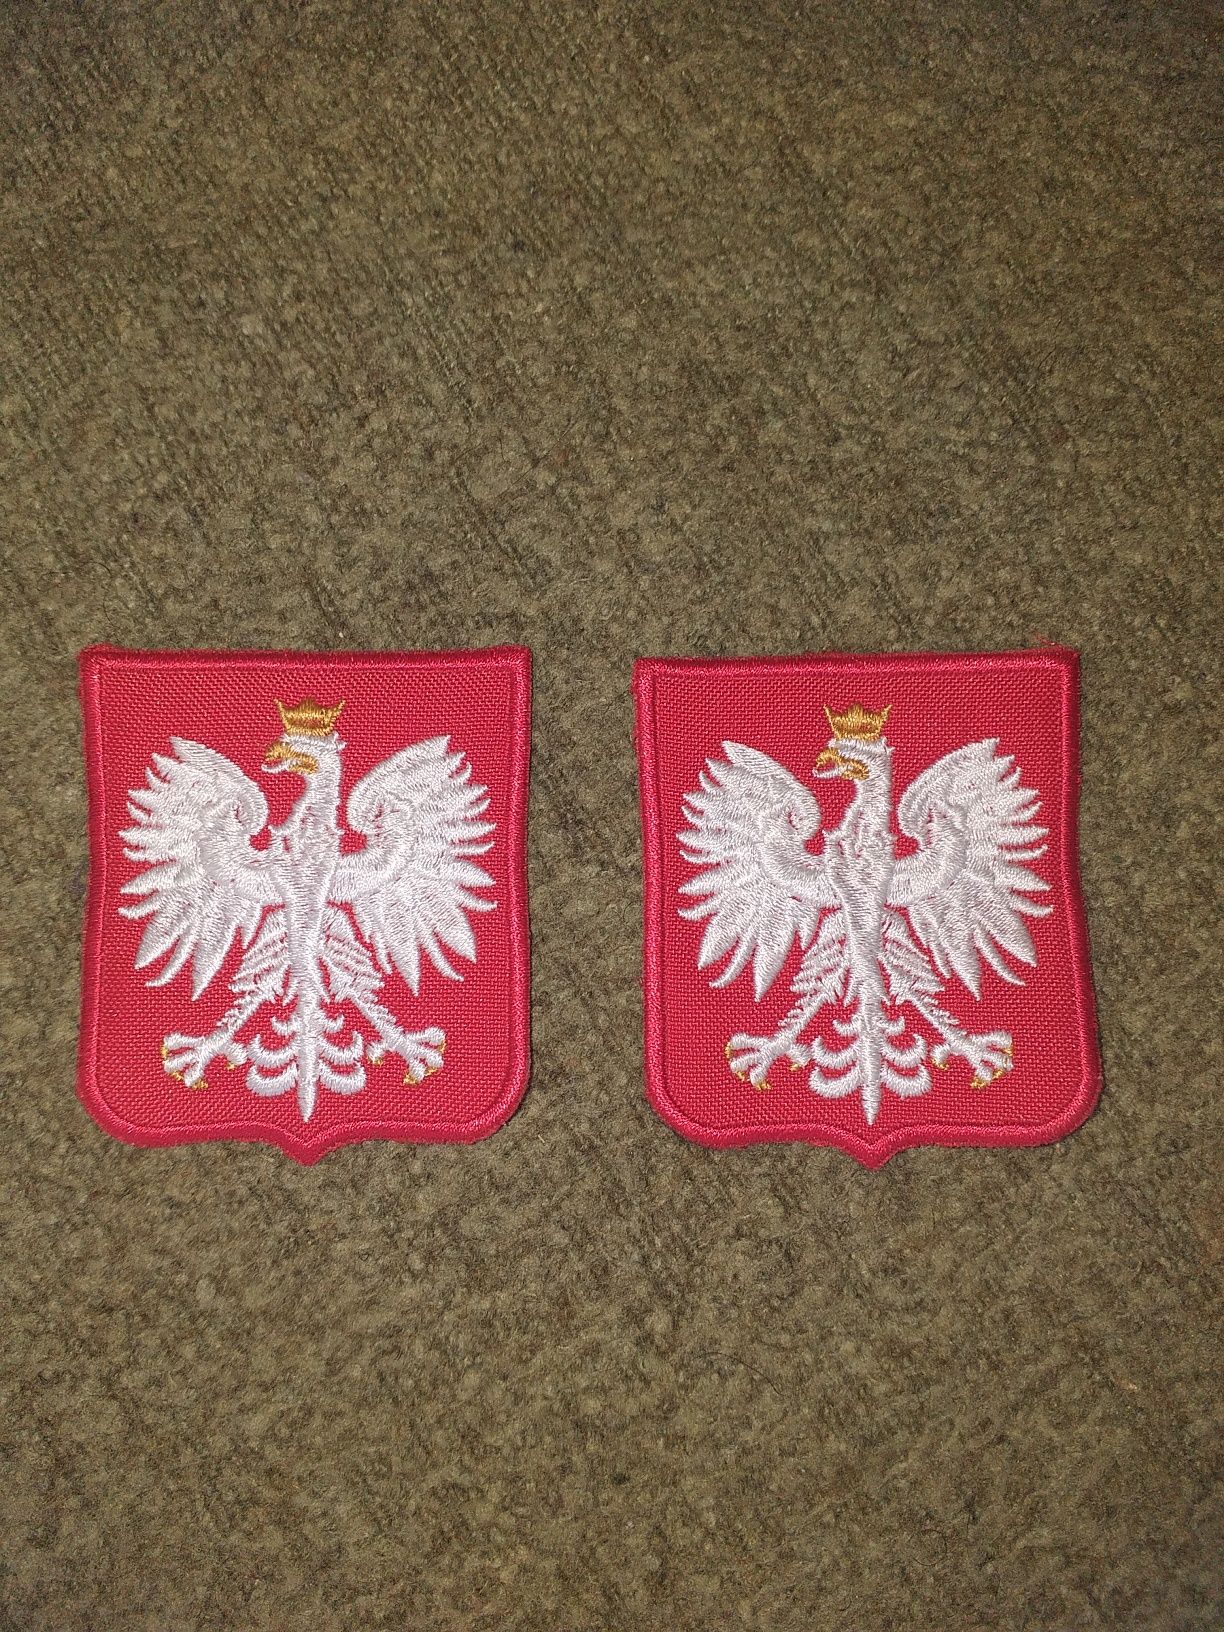 Godło Polskie na mundur, militaria,WP,demobil,wojskowe,policja,Polska